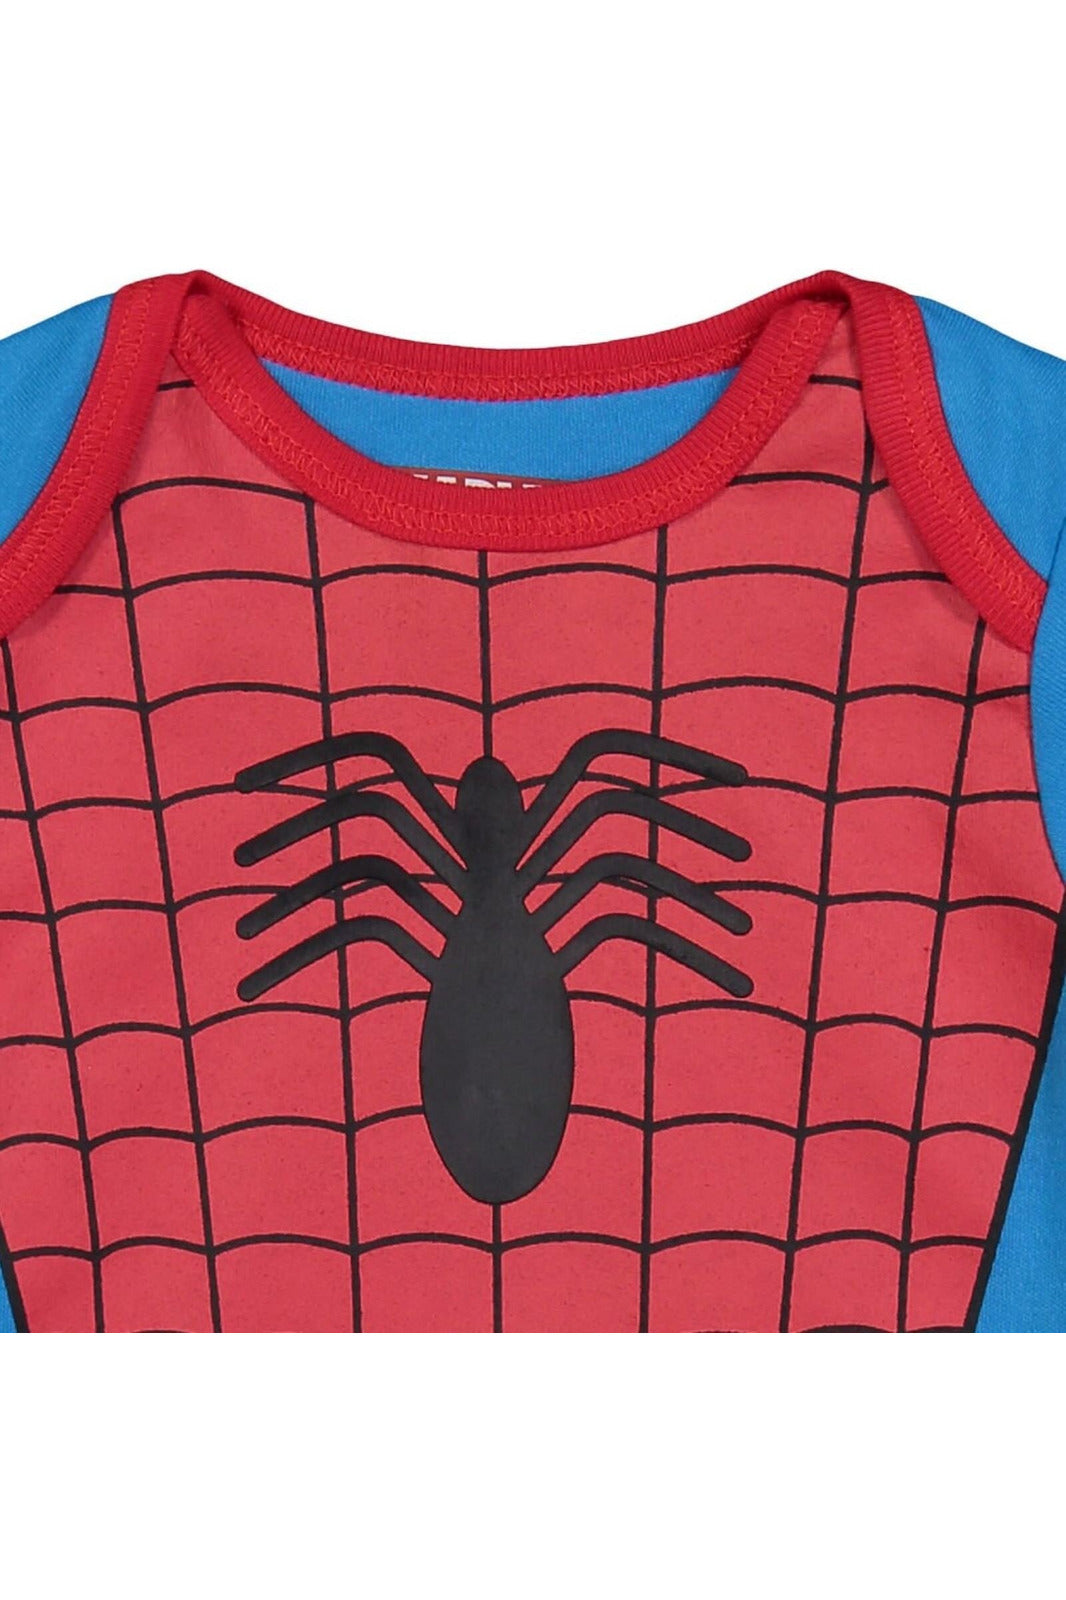 Marvel Spider-Man Cosplay Bodysuit and Pants Set